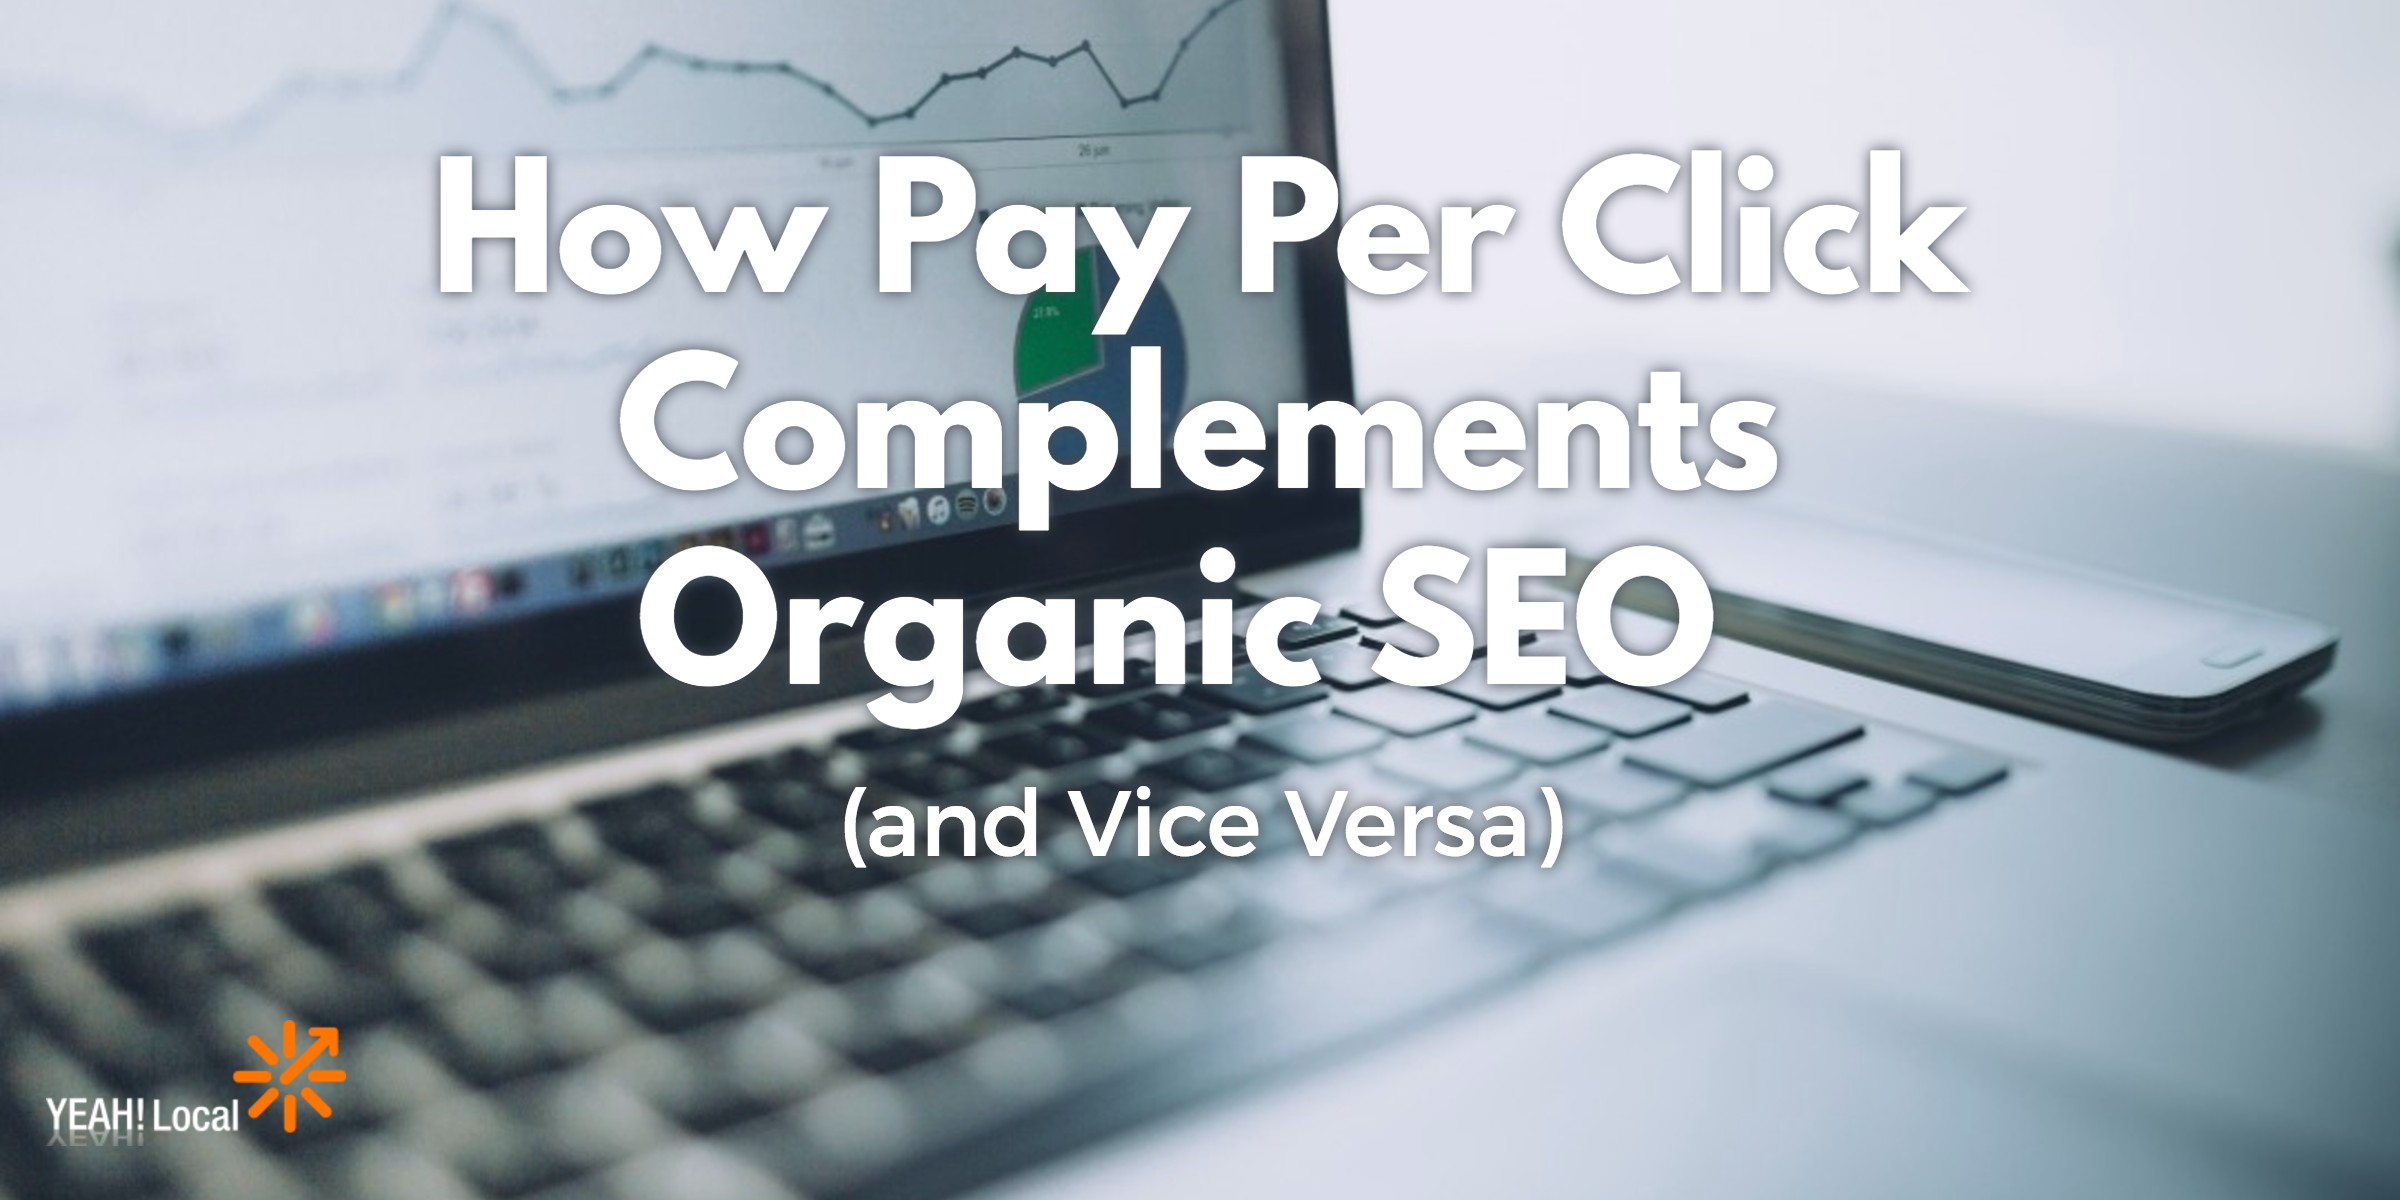 How Pay Per Click Complements Organic SEO